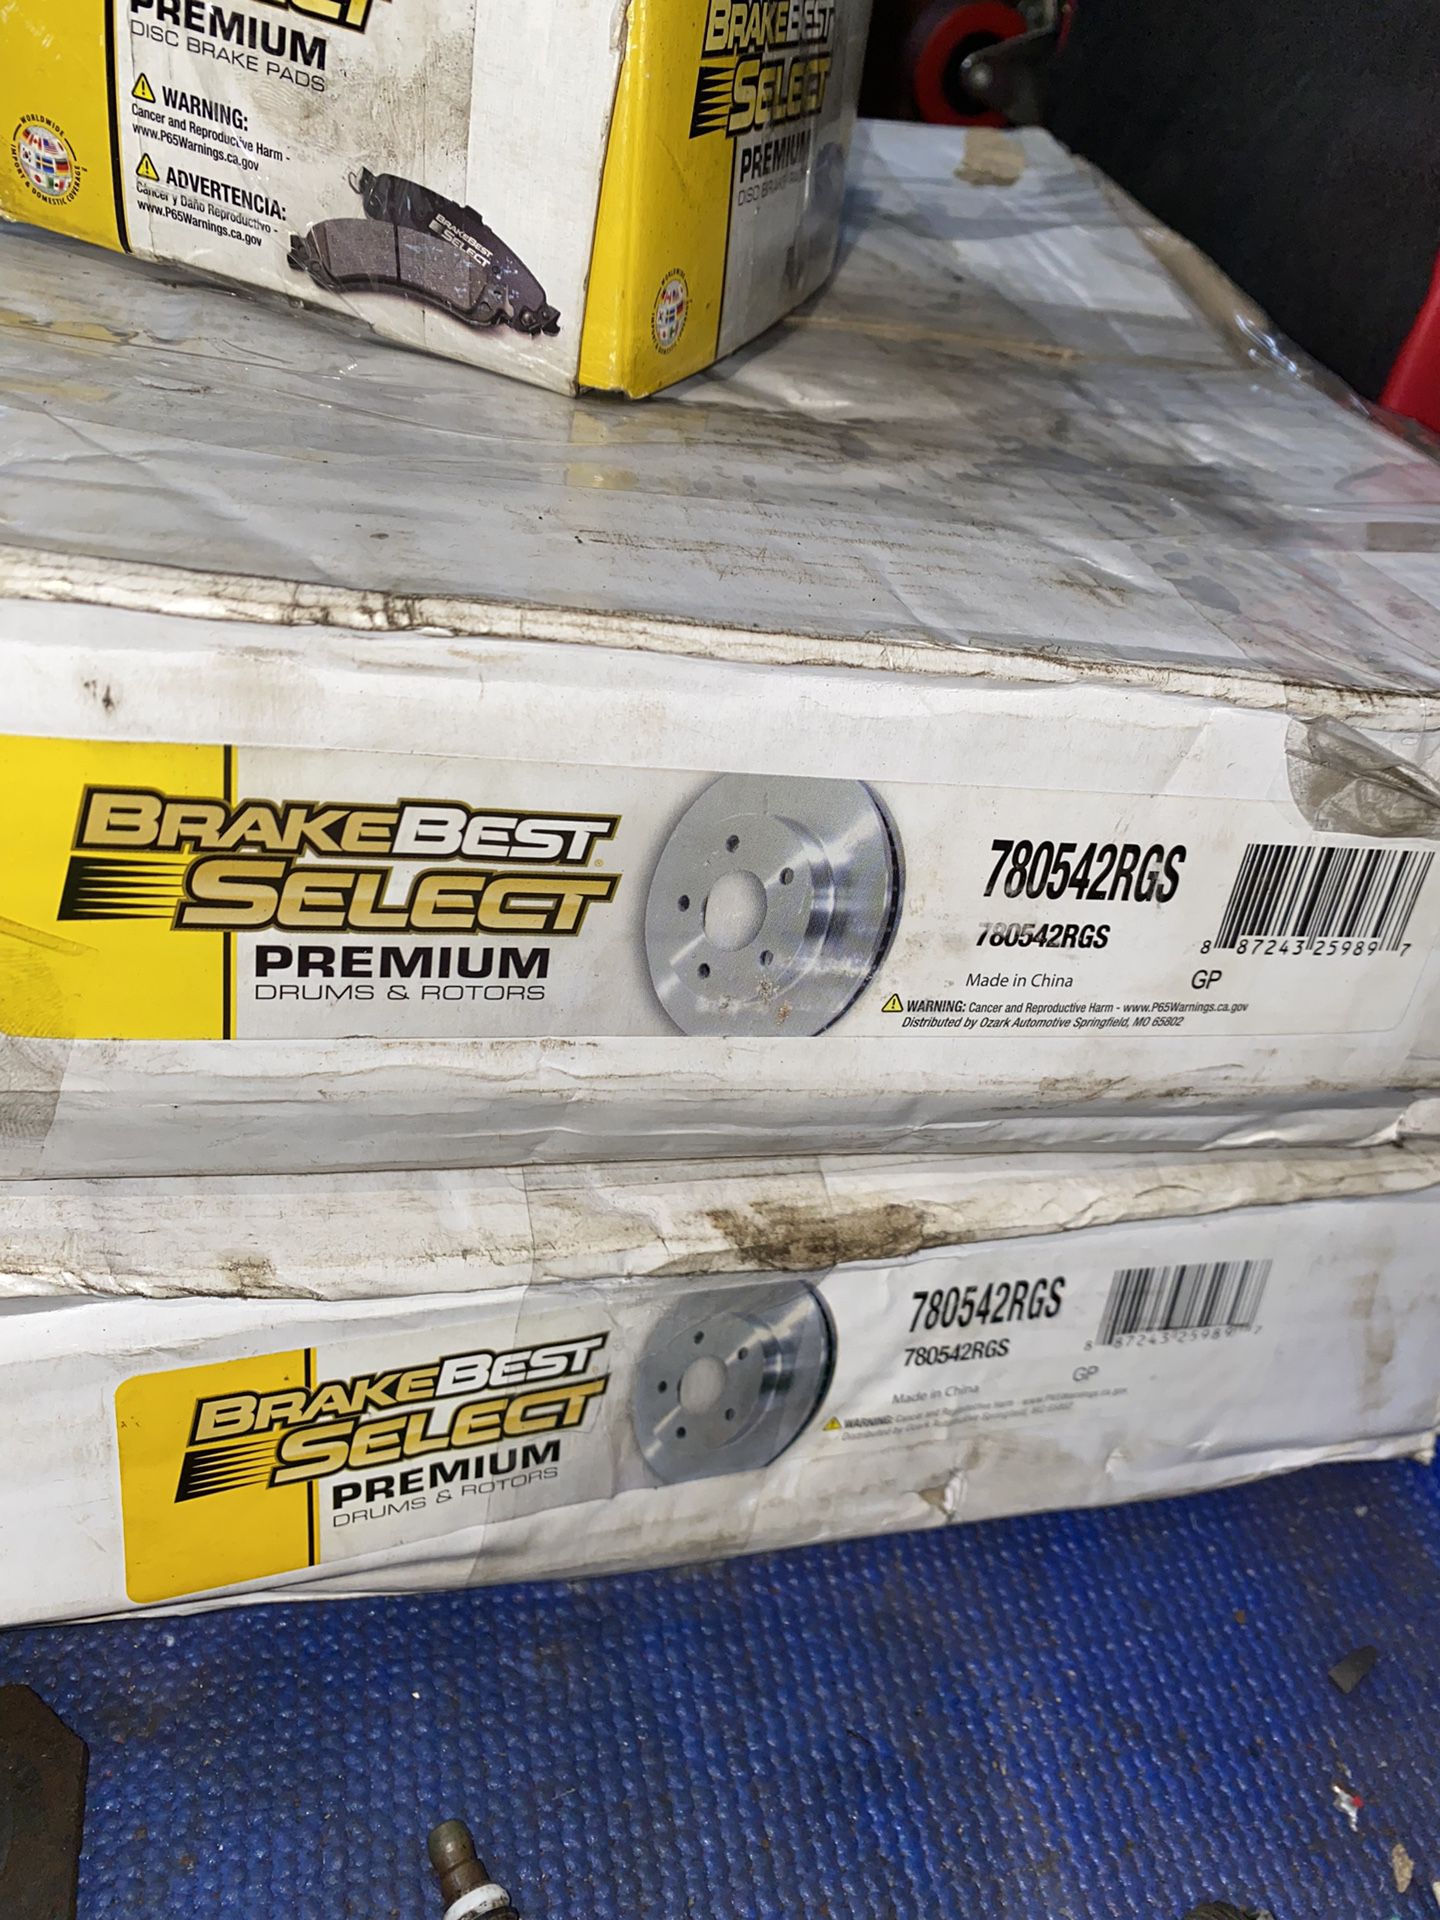 New BrakeBest Select Premium Dodge Nitro/Jeep Brake Pads And Rotors